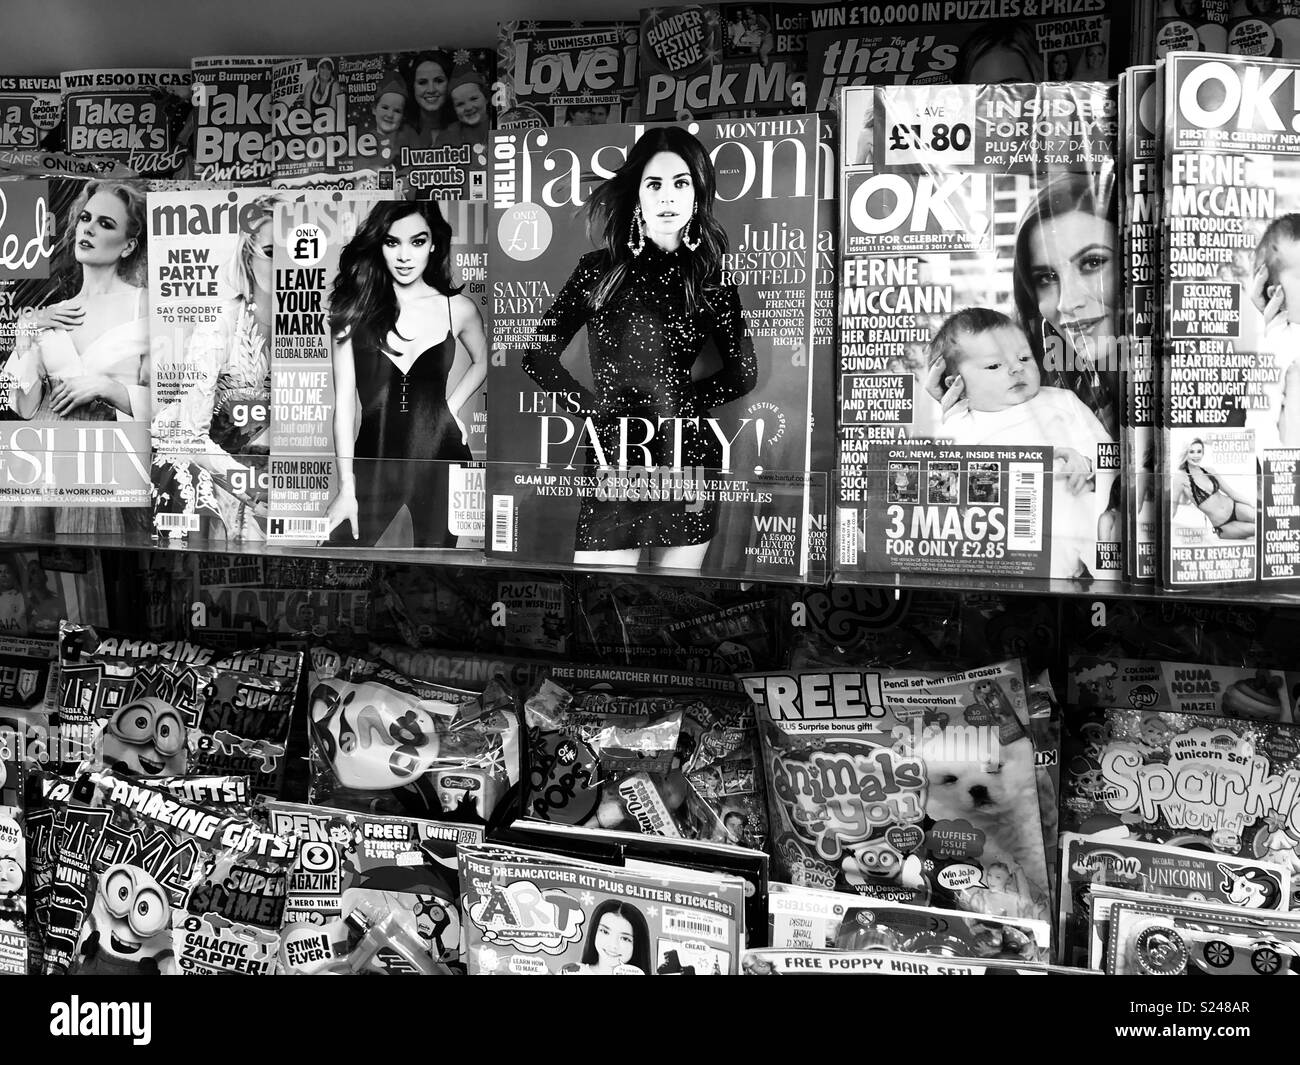 Display of magazines on shelf Stock Photo